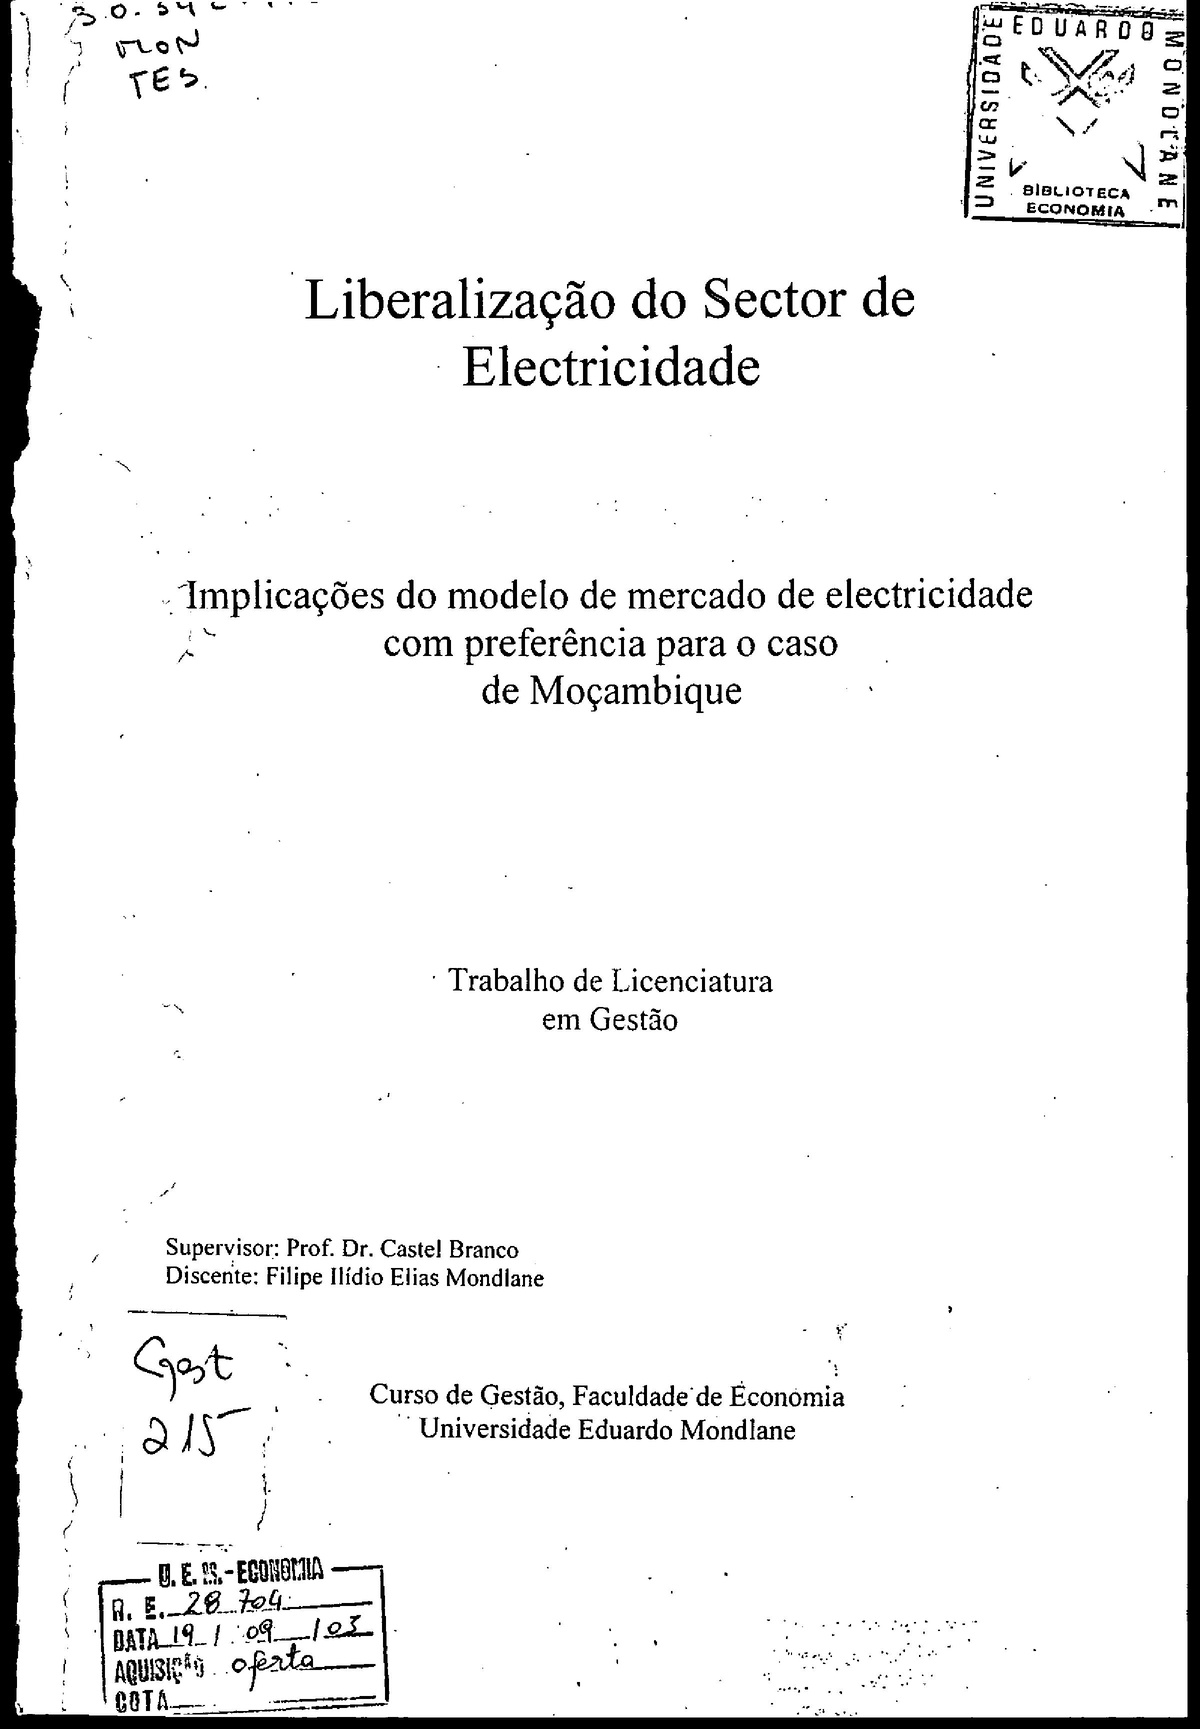 calculator Original Flat File:PT-Liberalizacao do Sector de Electricidade-Filipe Ilídio Elias  Mondlane.pdf - energypedia